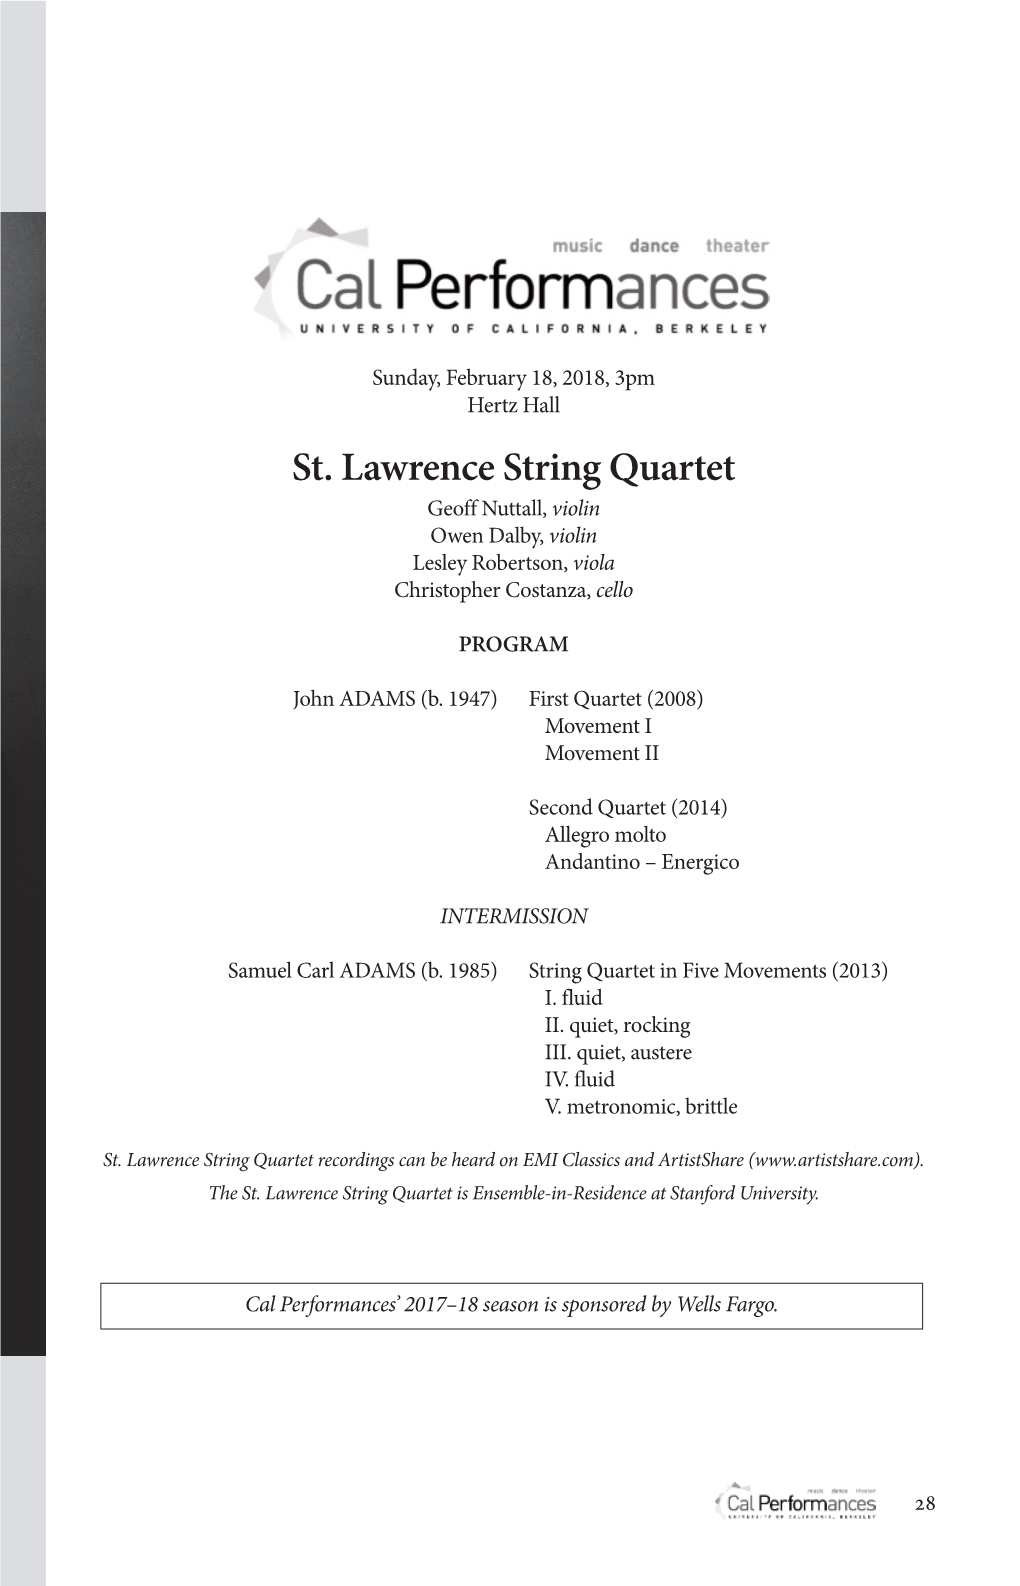 St. Lawrence String Quartet Geoff Nuttall, Violin Owen Dalby, Violin Lesley Robertson, Viola Christopher Costanza, Cello